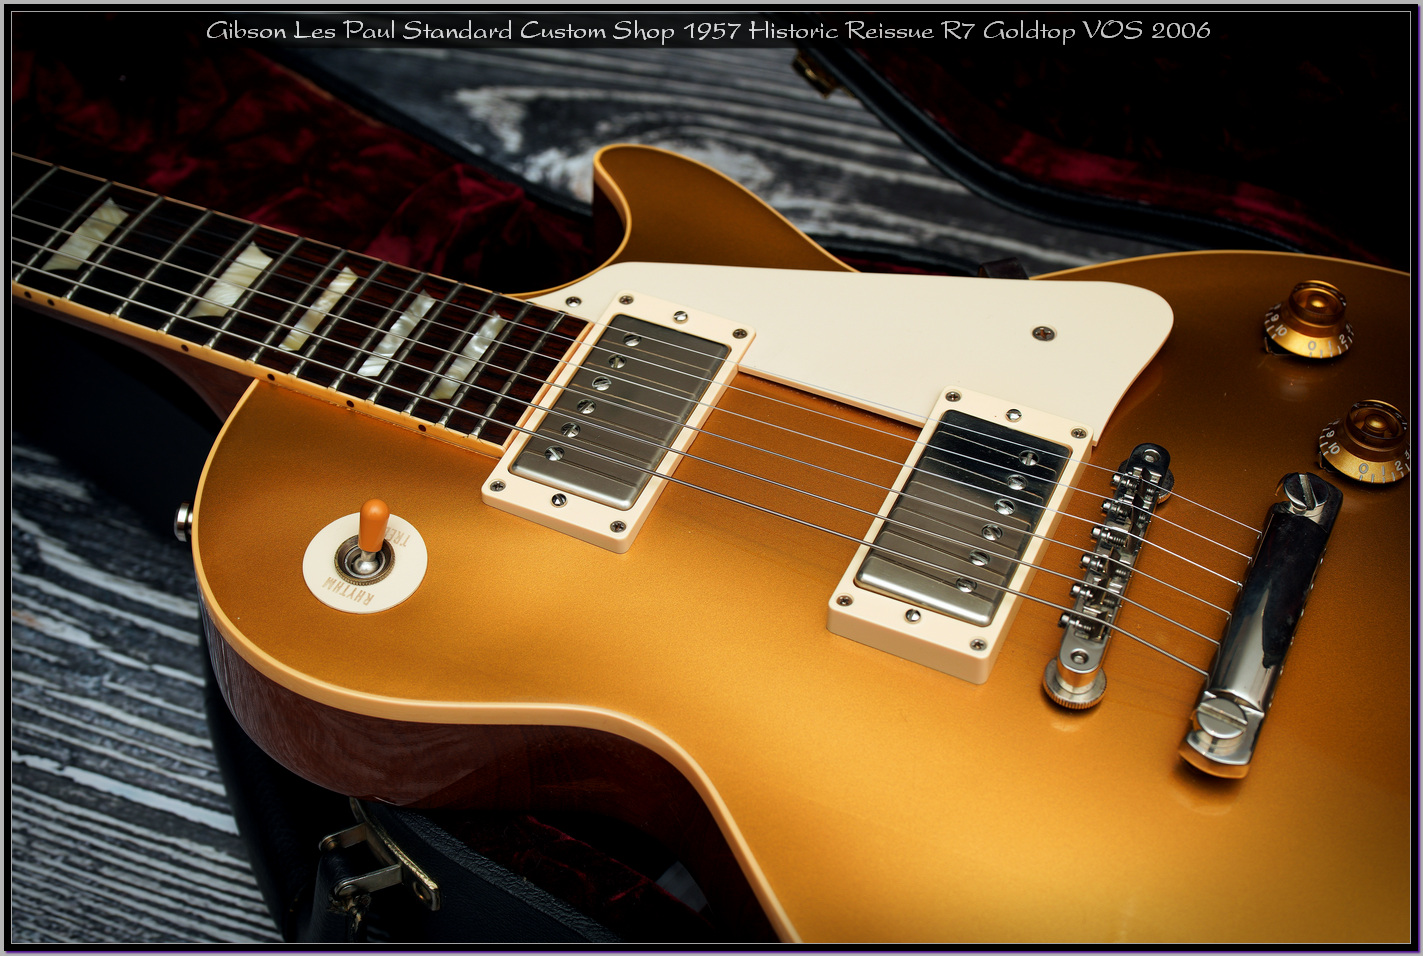 Gibson Les Paul Standard Custom Shop 1957 Historic Reissue R7 Goldtop VOS 2006 10_x1400.jpg